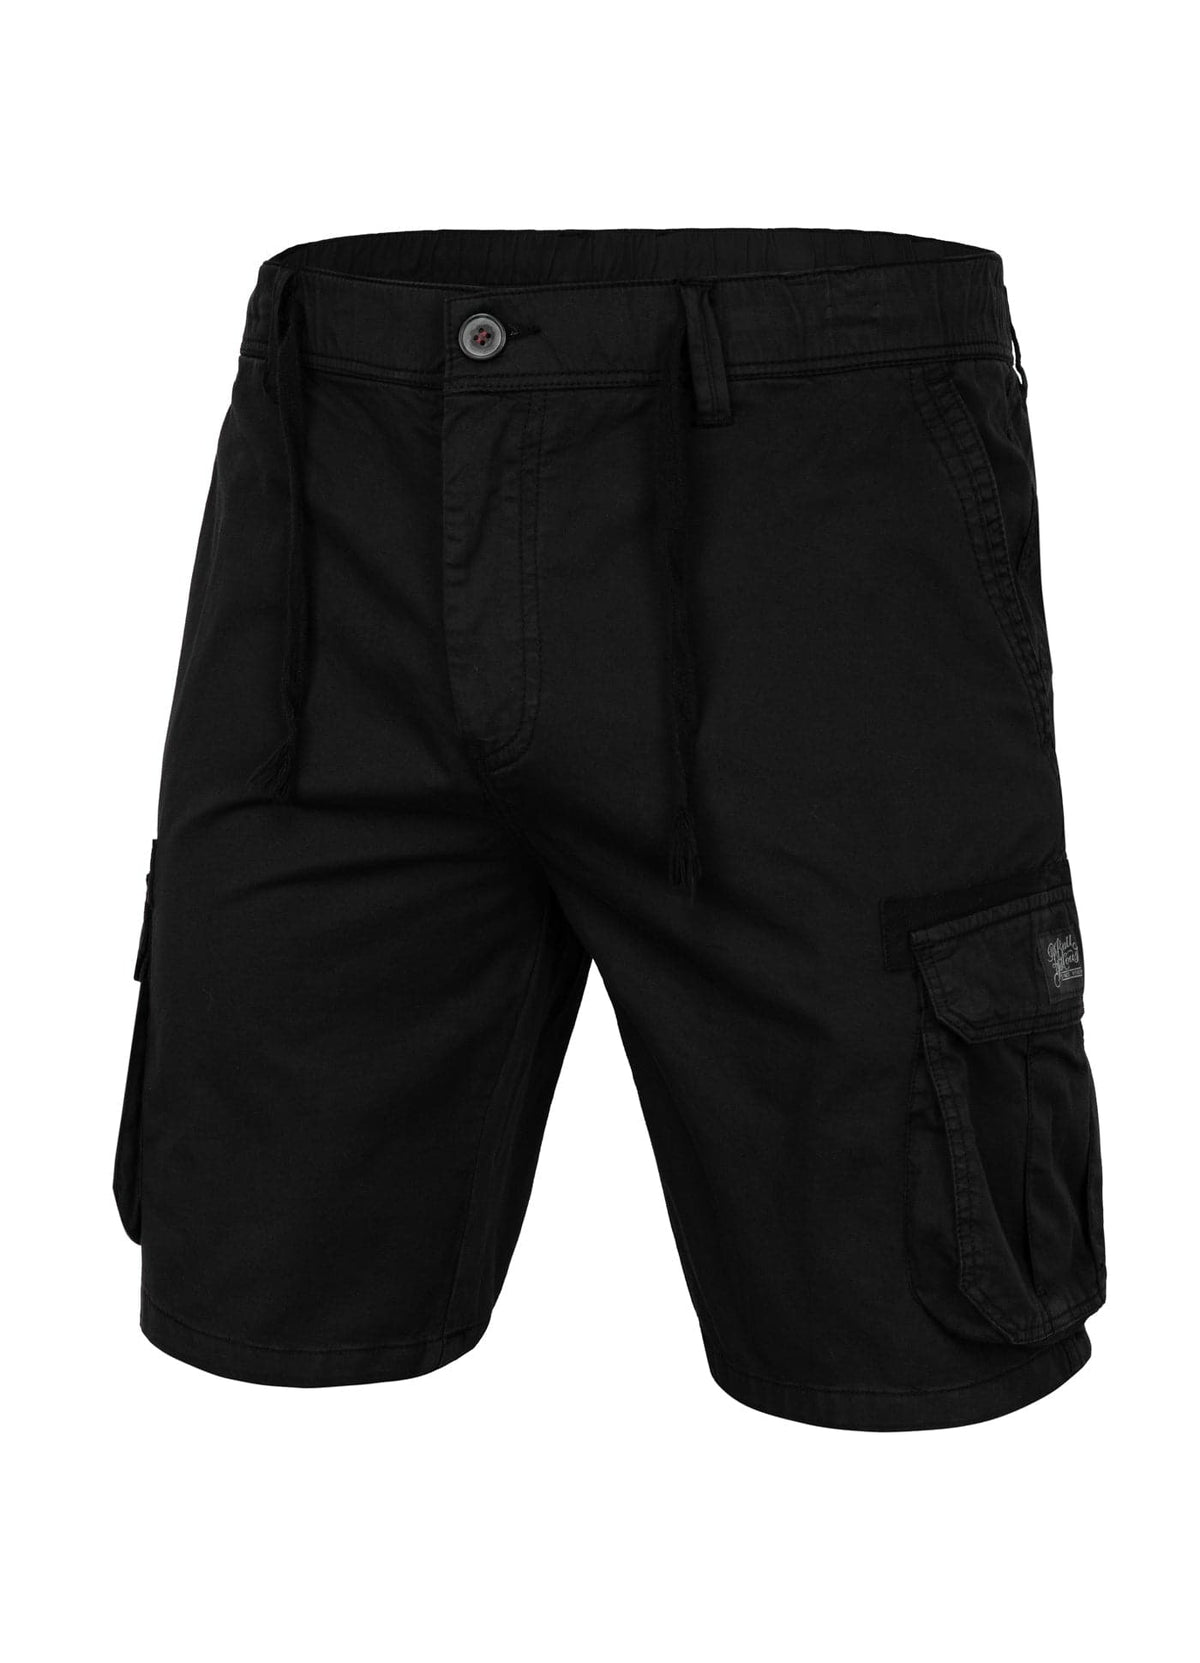 ARAGON Black Cargo Shorts - Pitbullstore.eu